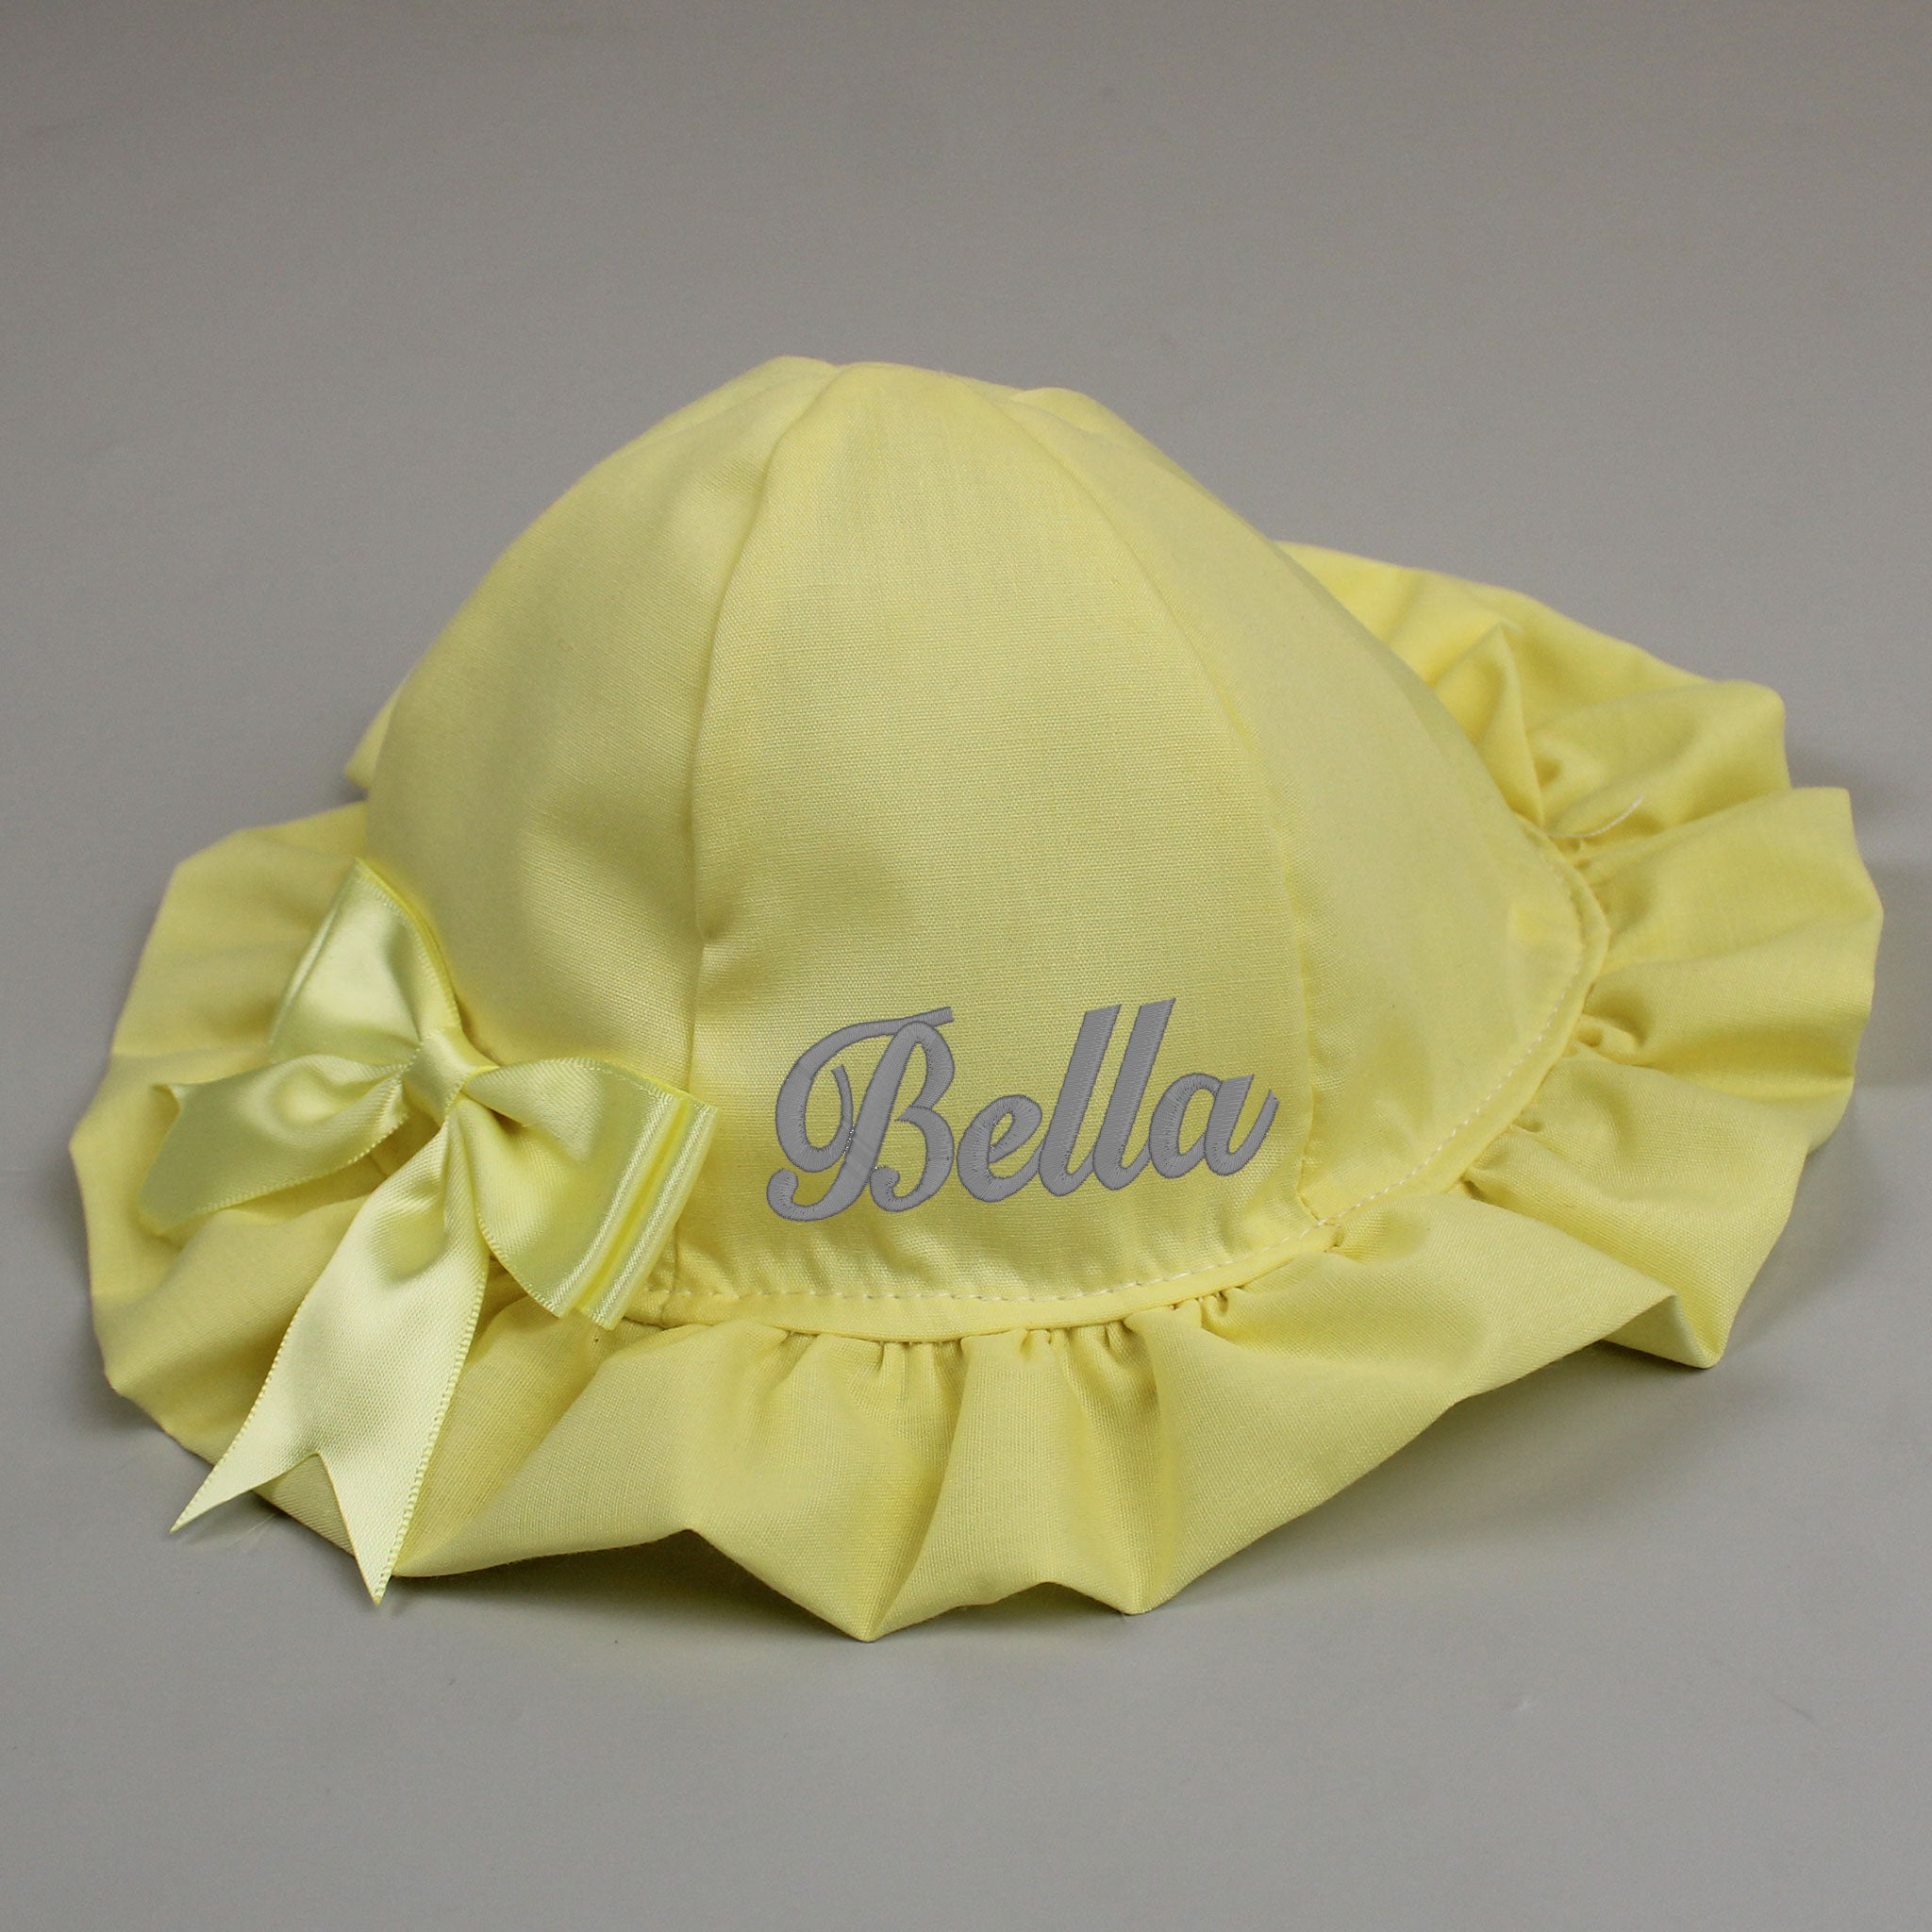 Personalised baby sun hat - sunhat lemon yellow easter